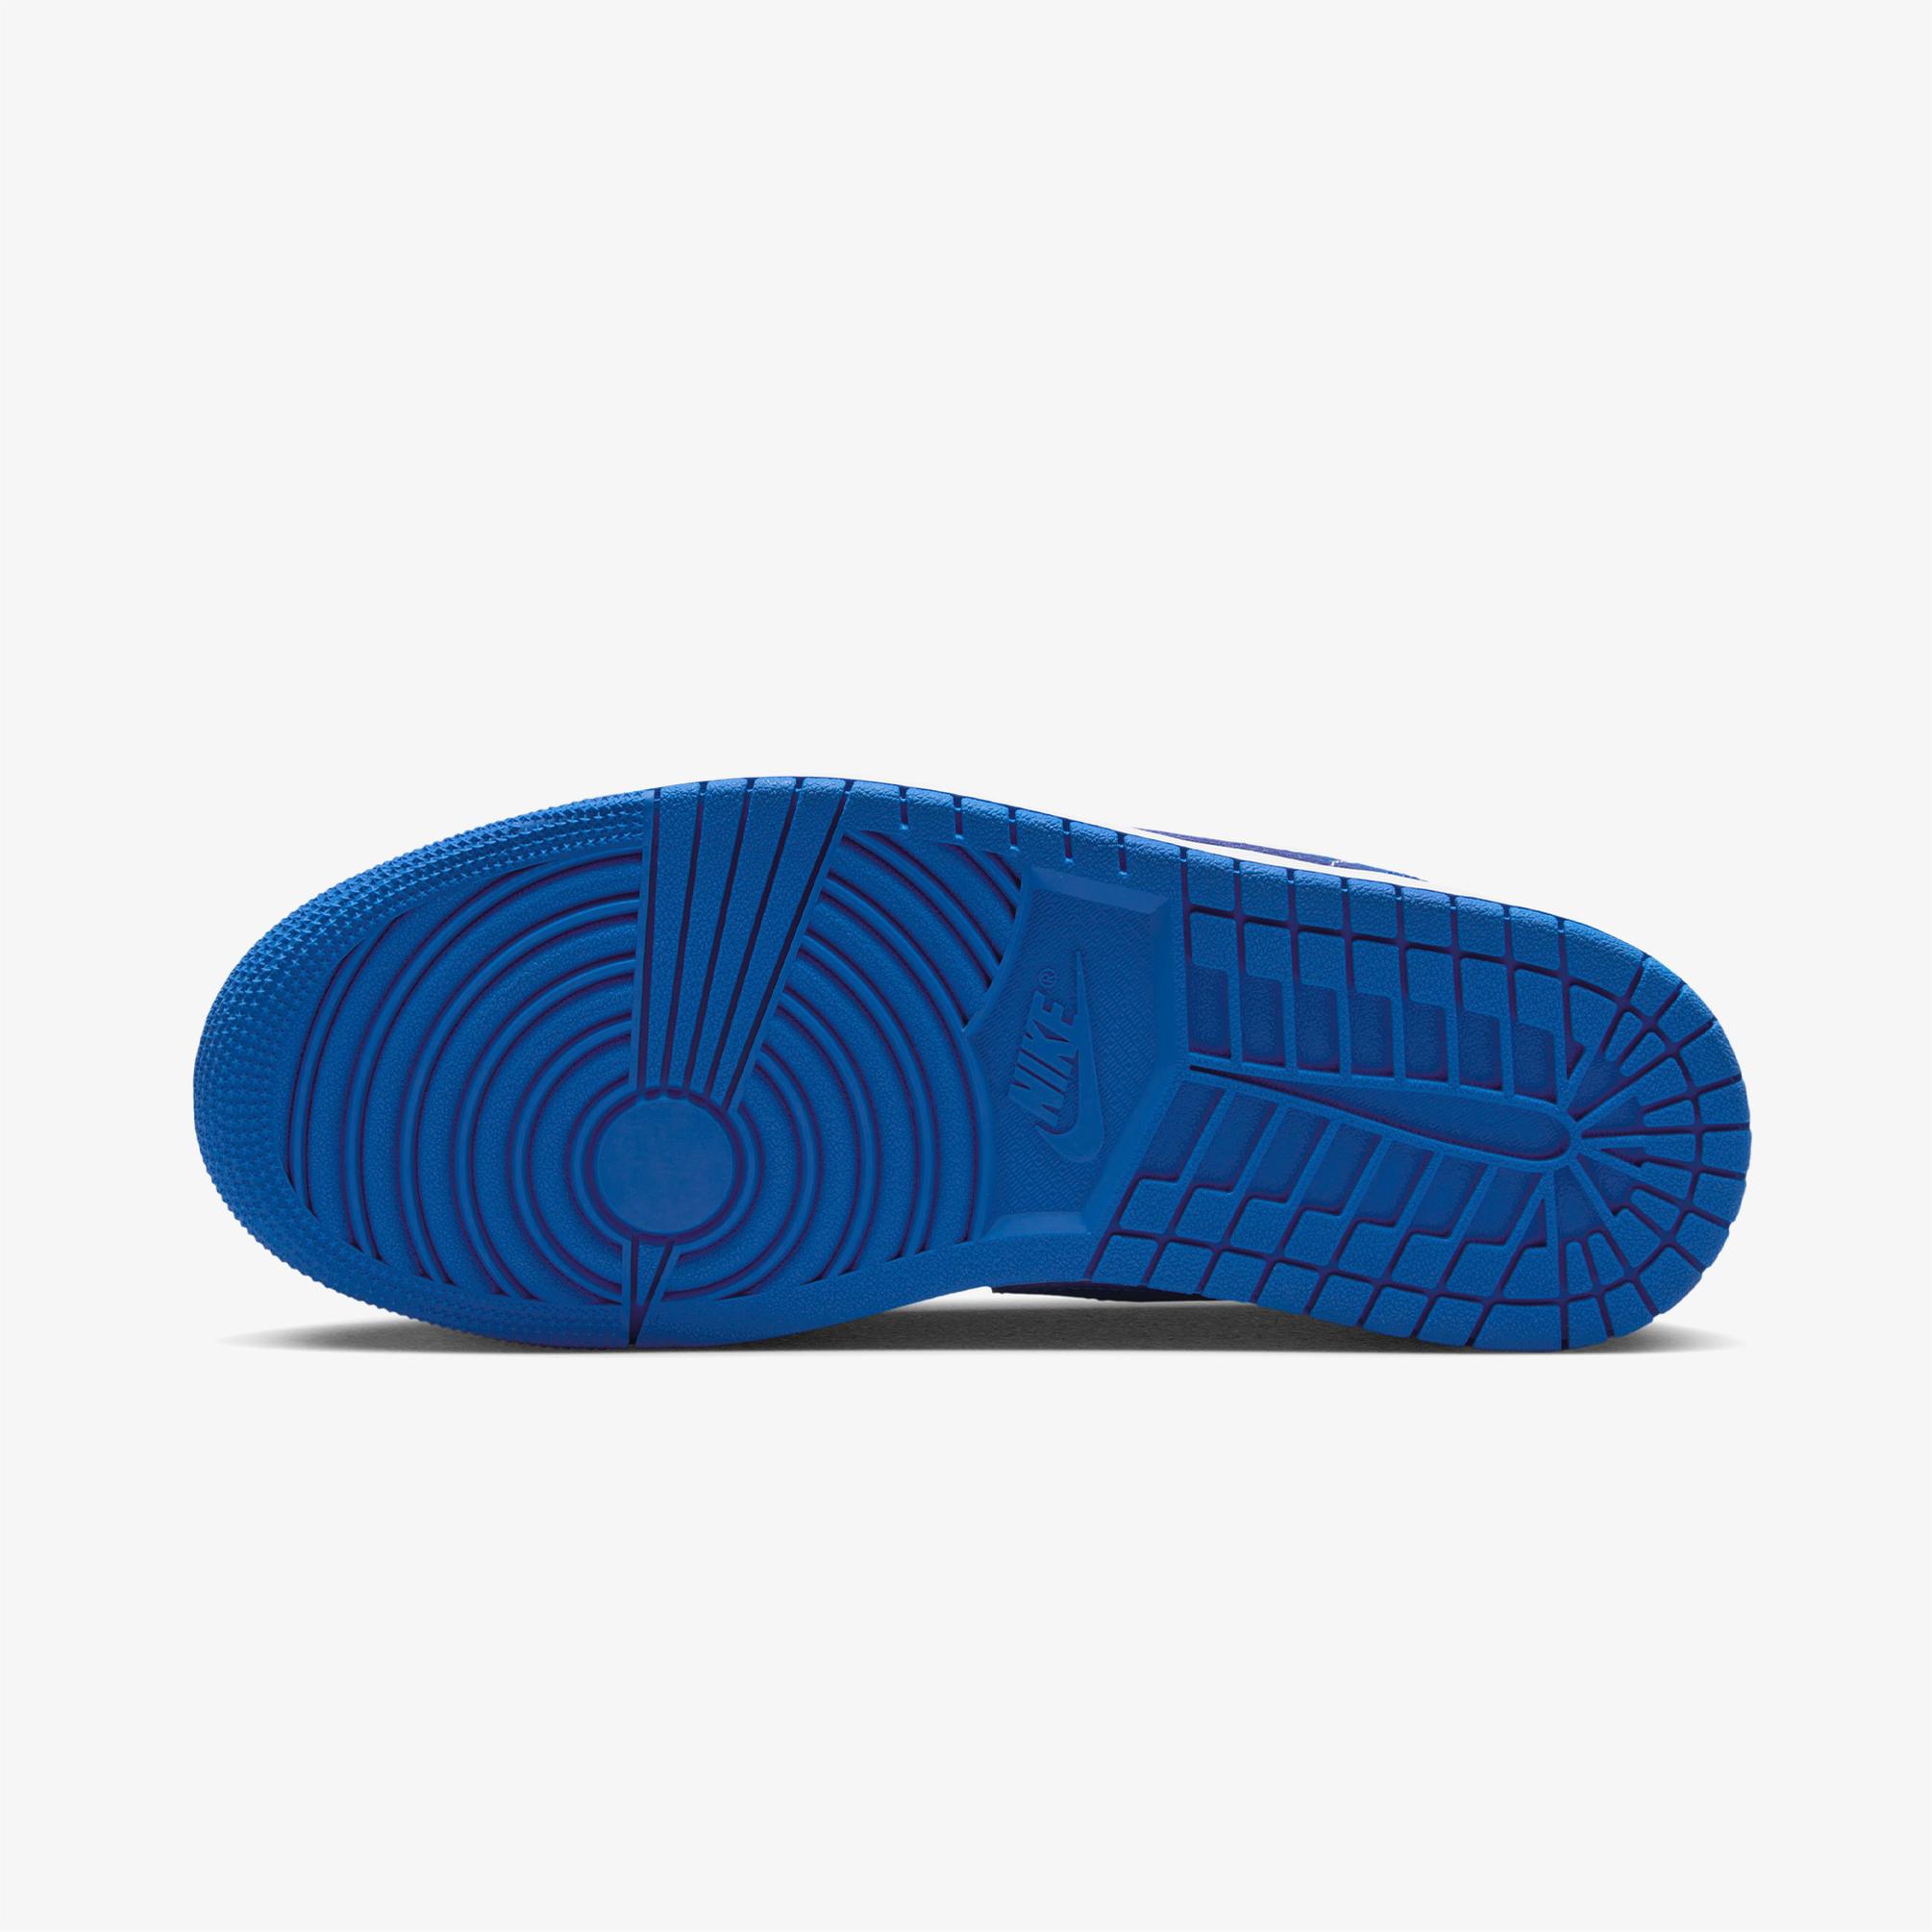  Jordan Air 1 Low Erkek Beyaz/Siyah/Mavi Sneaker